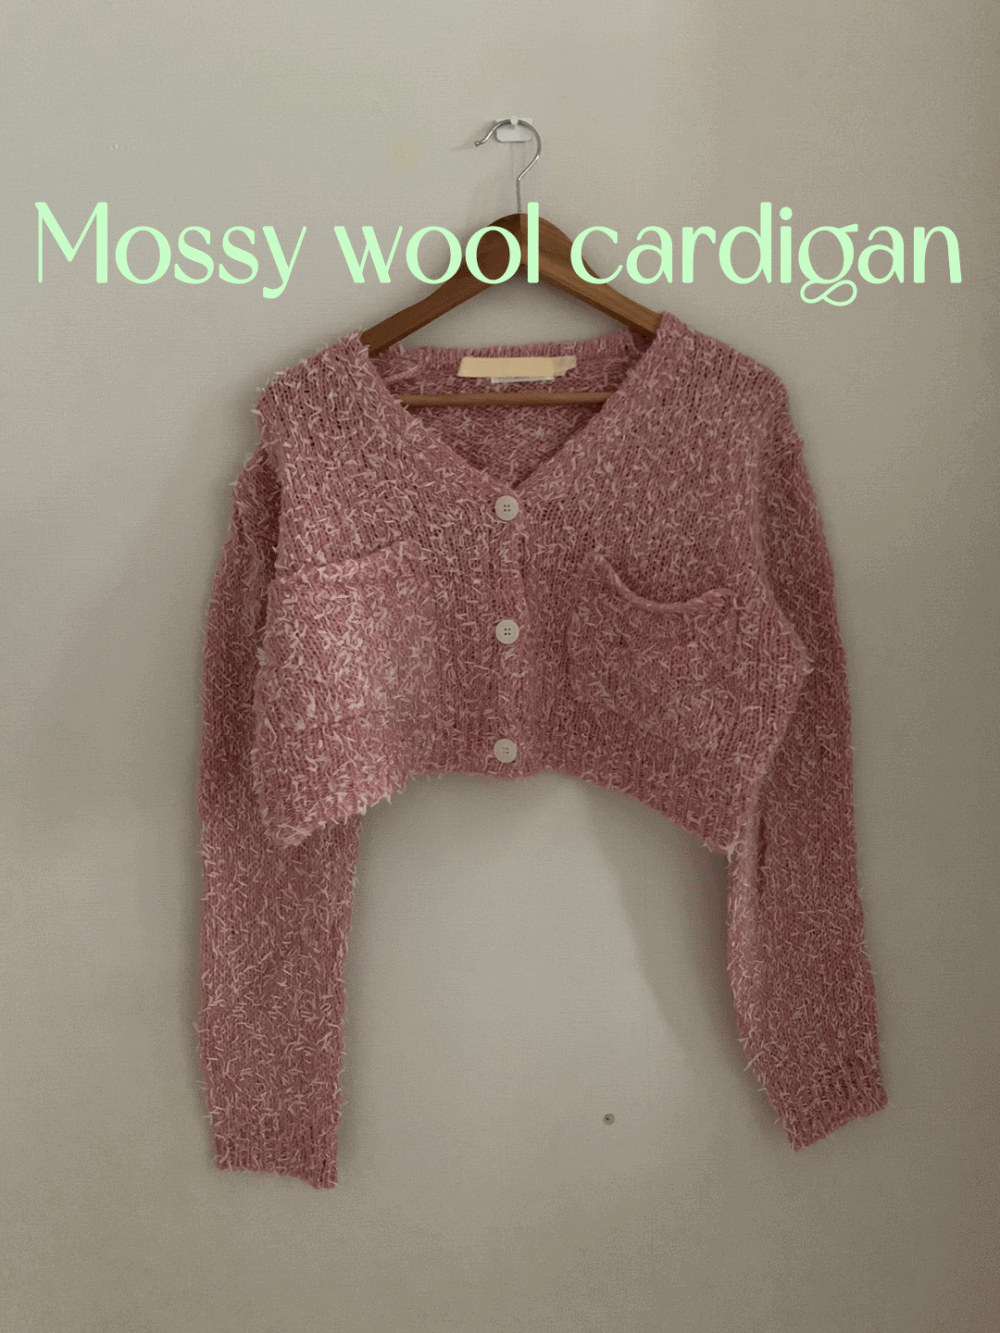 Mossy wool cardigan / 3 colors